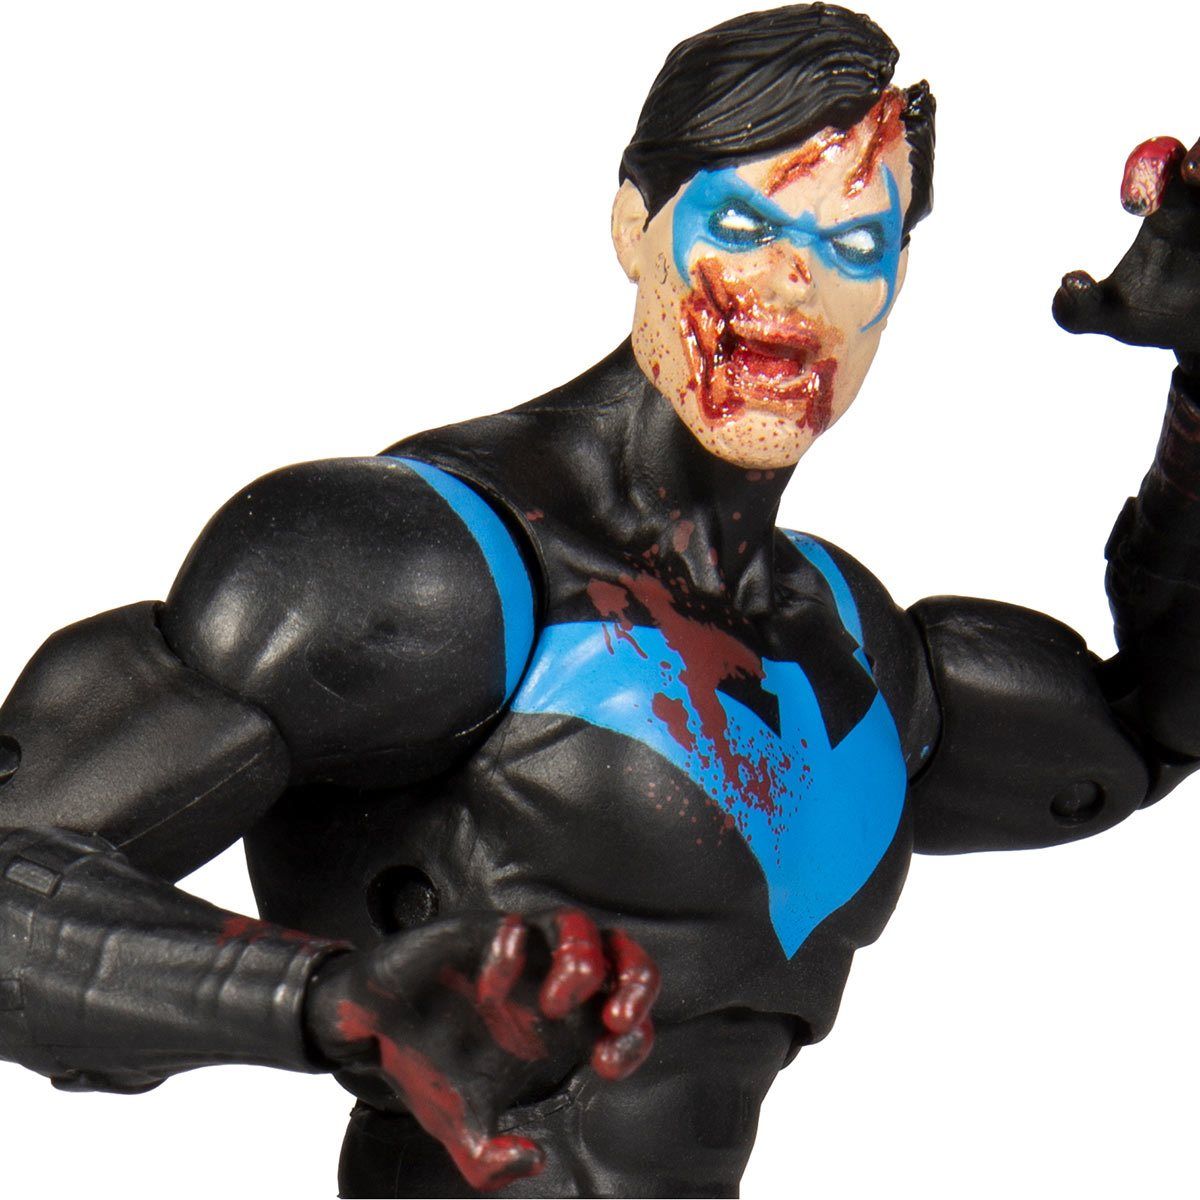 DC Essentials DCeased Nightwing Action Figure